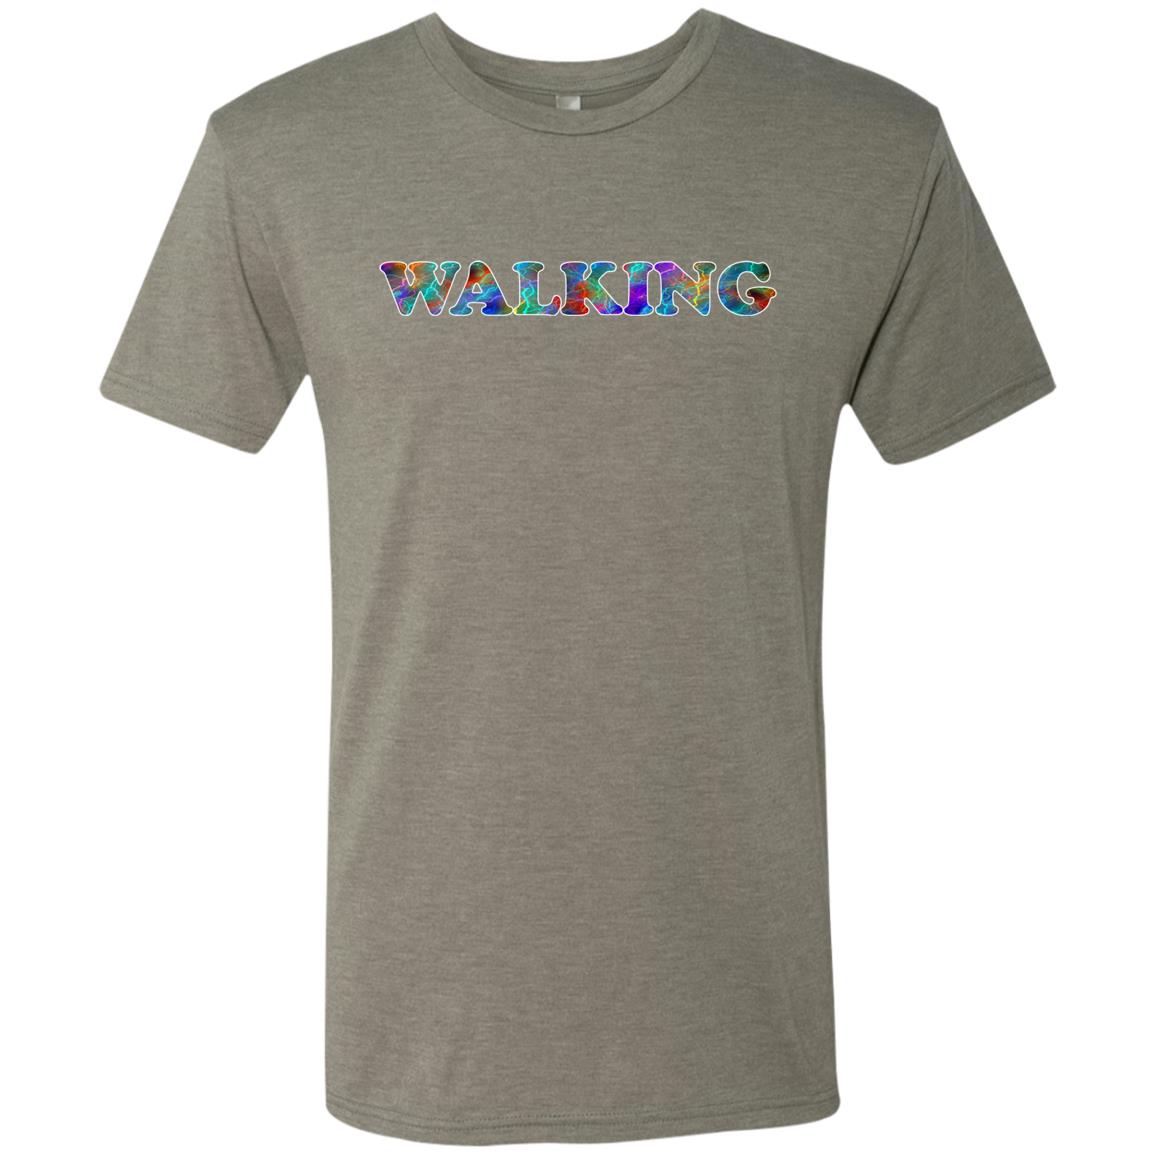 Walking Sport T-Shirt